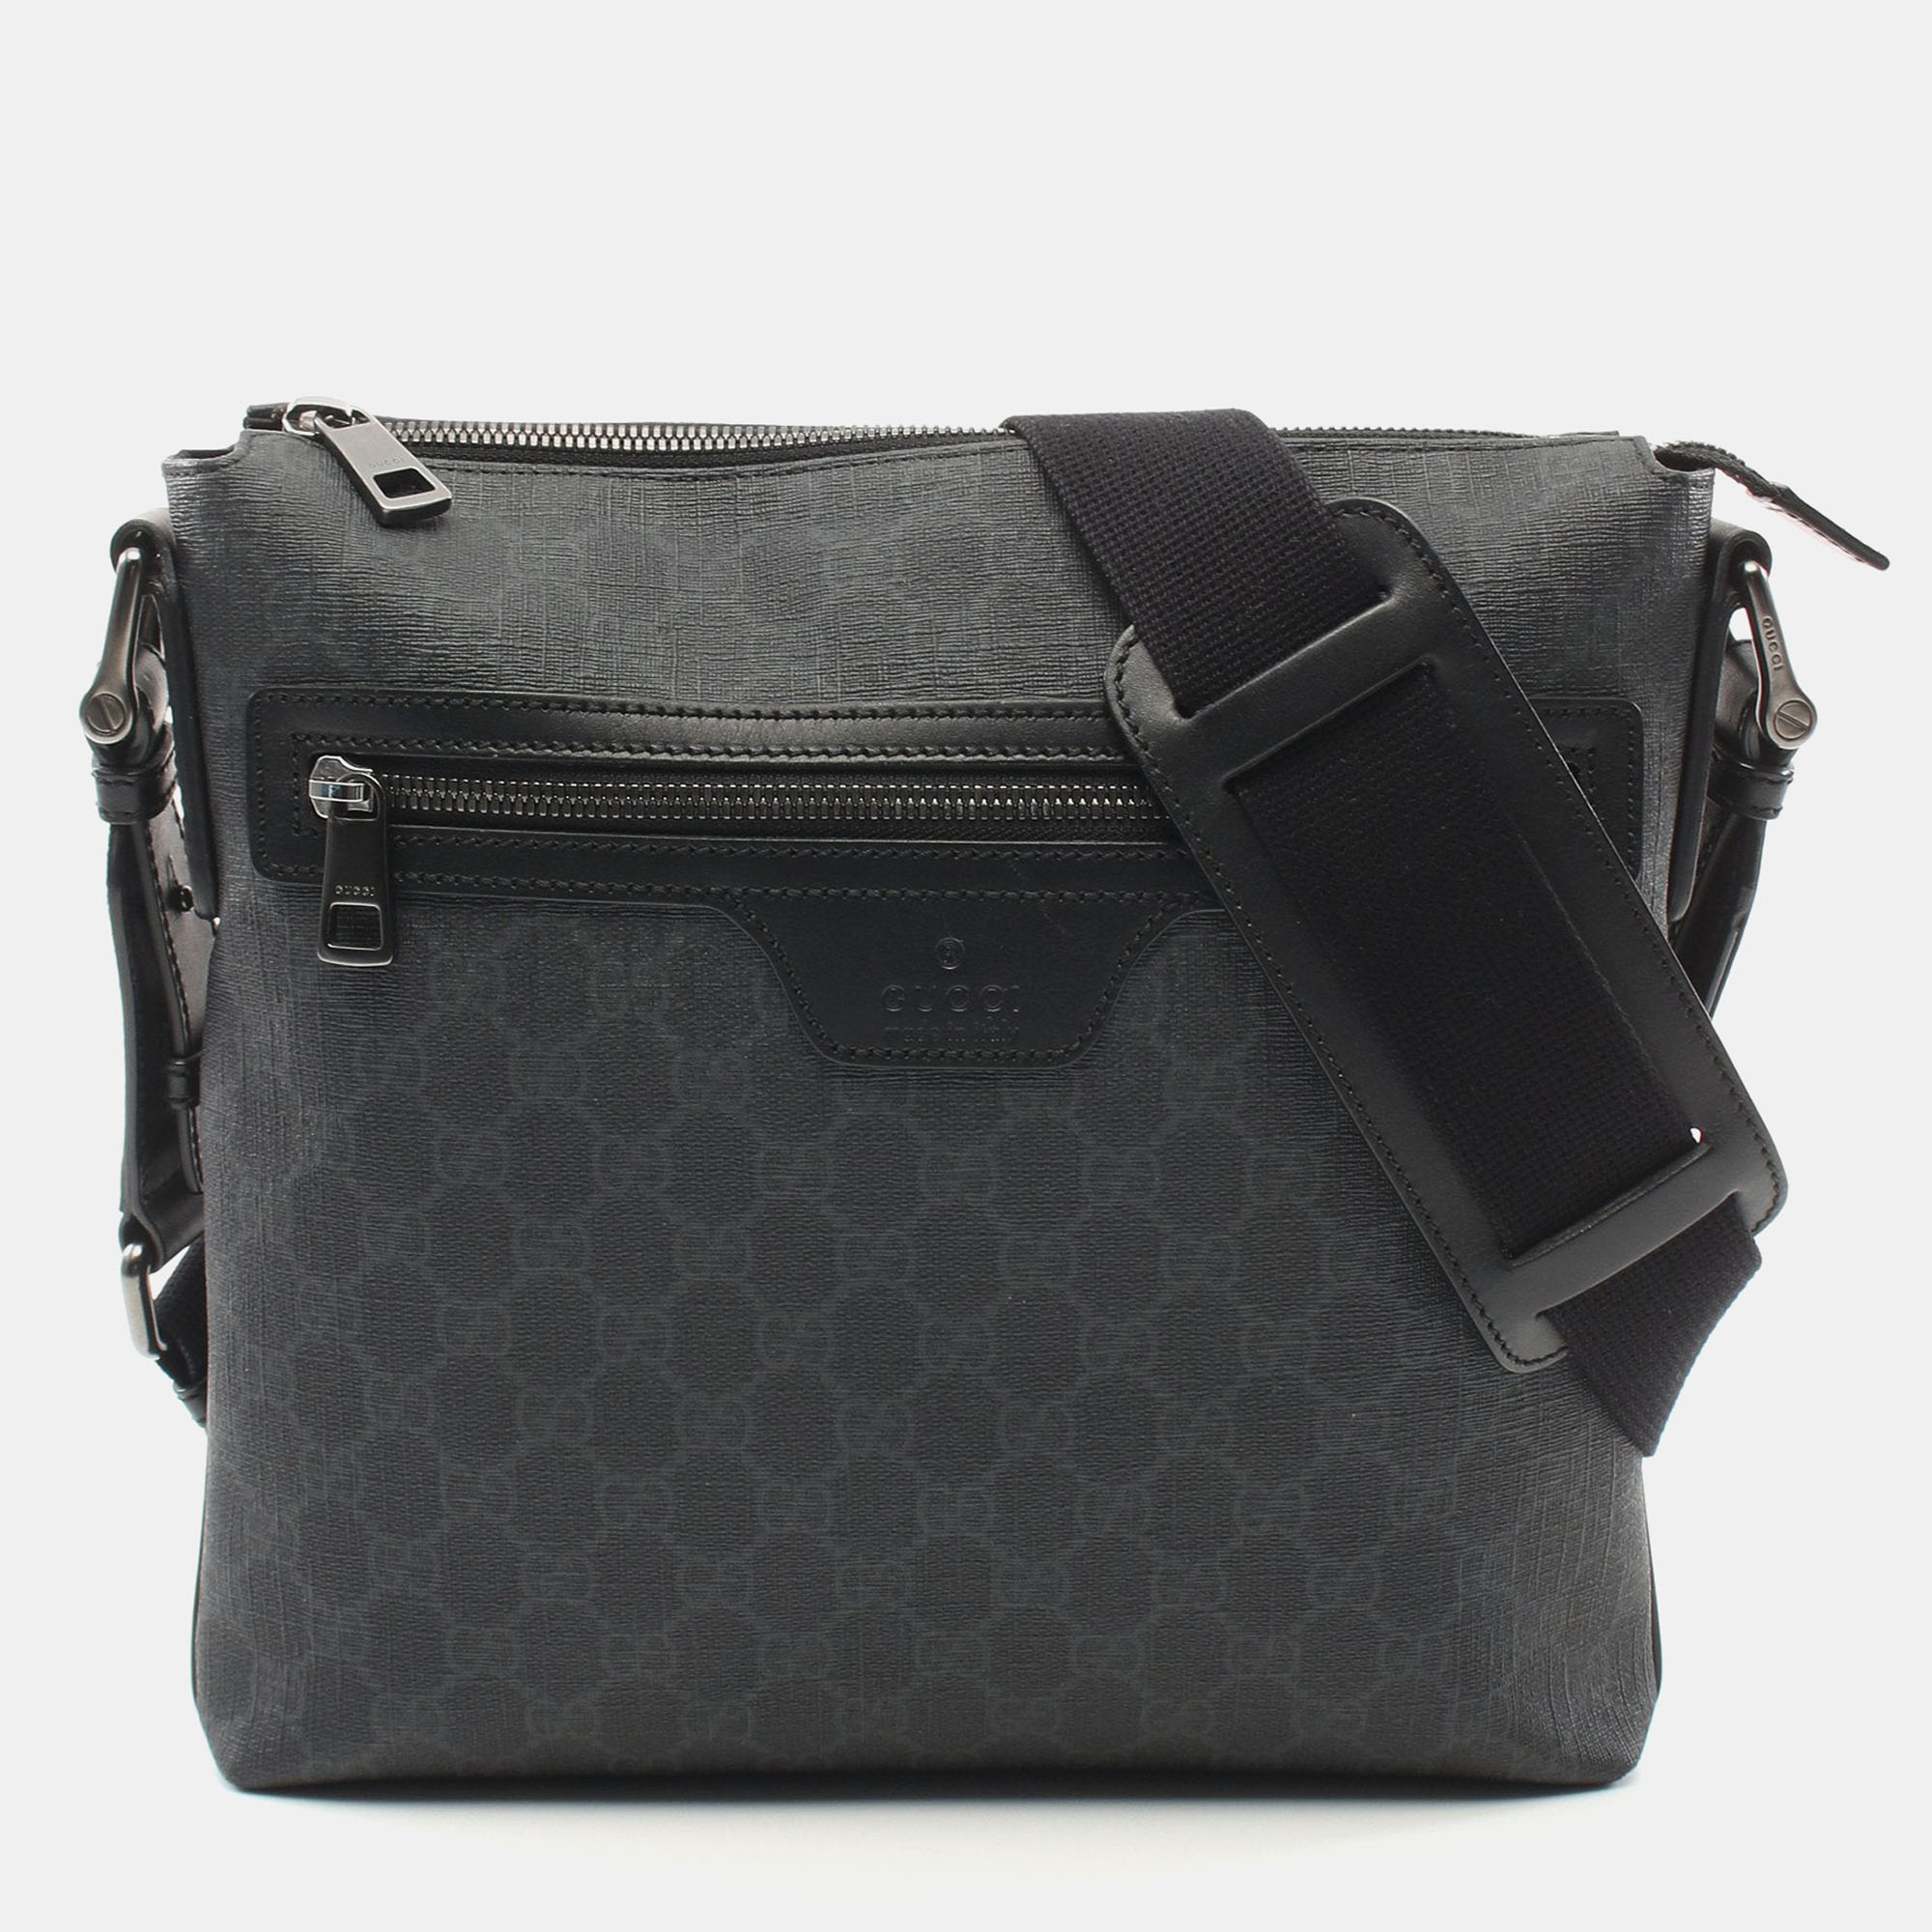 Gucci gg supreme shoulder bag pvc leather black dark gray